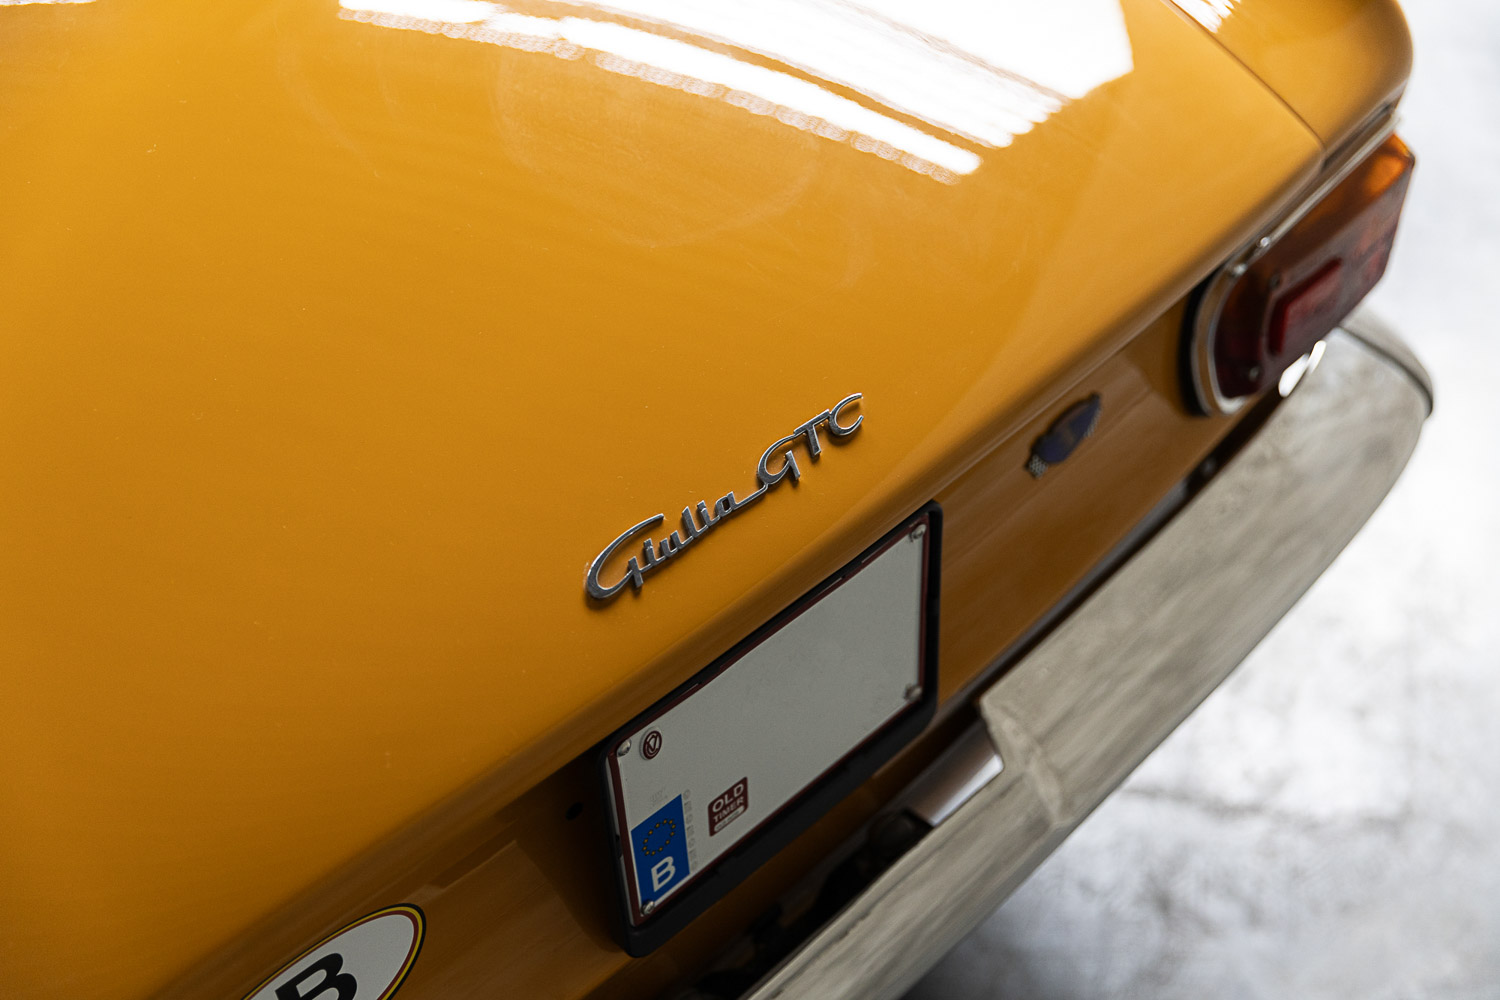 1966-Alfa-Romeo-Giulia-GTC-for-sale-DriveCity-Sales-72dpi-4